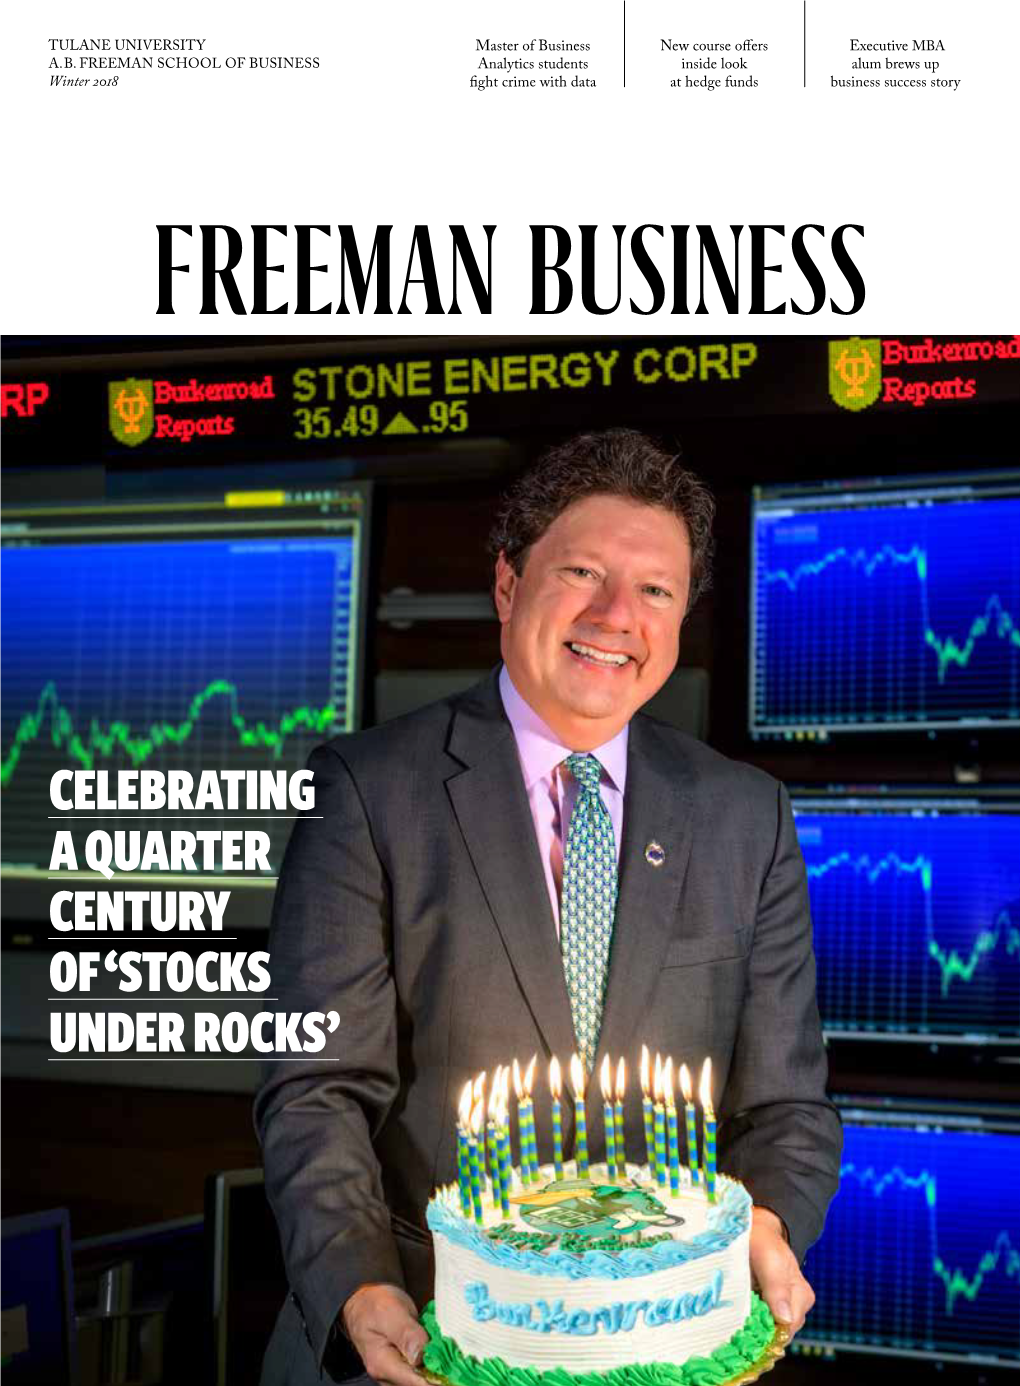 Celebrating a Quarter Century of 'Stocks Under